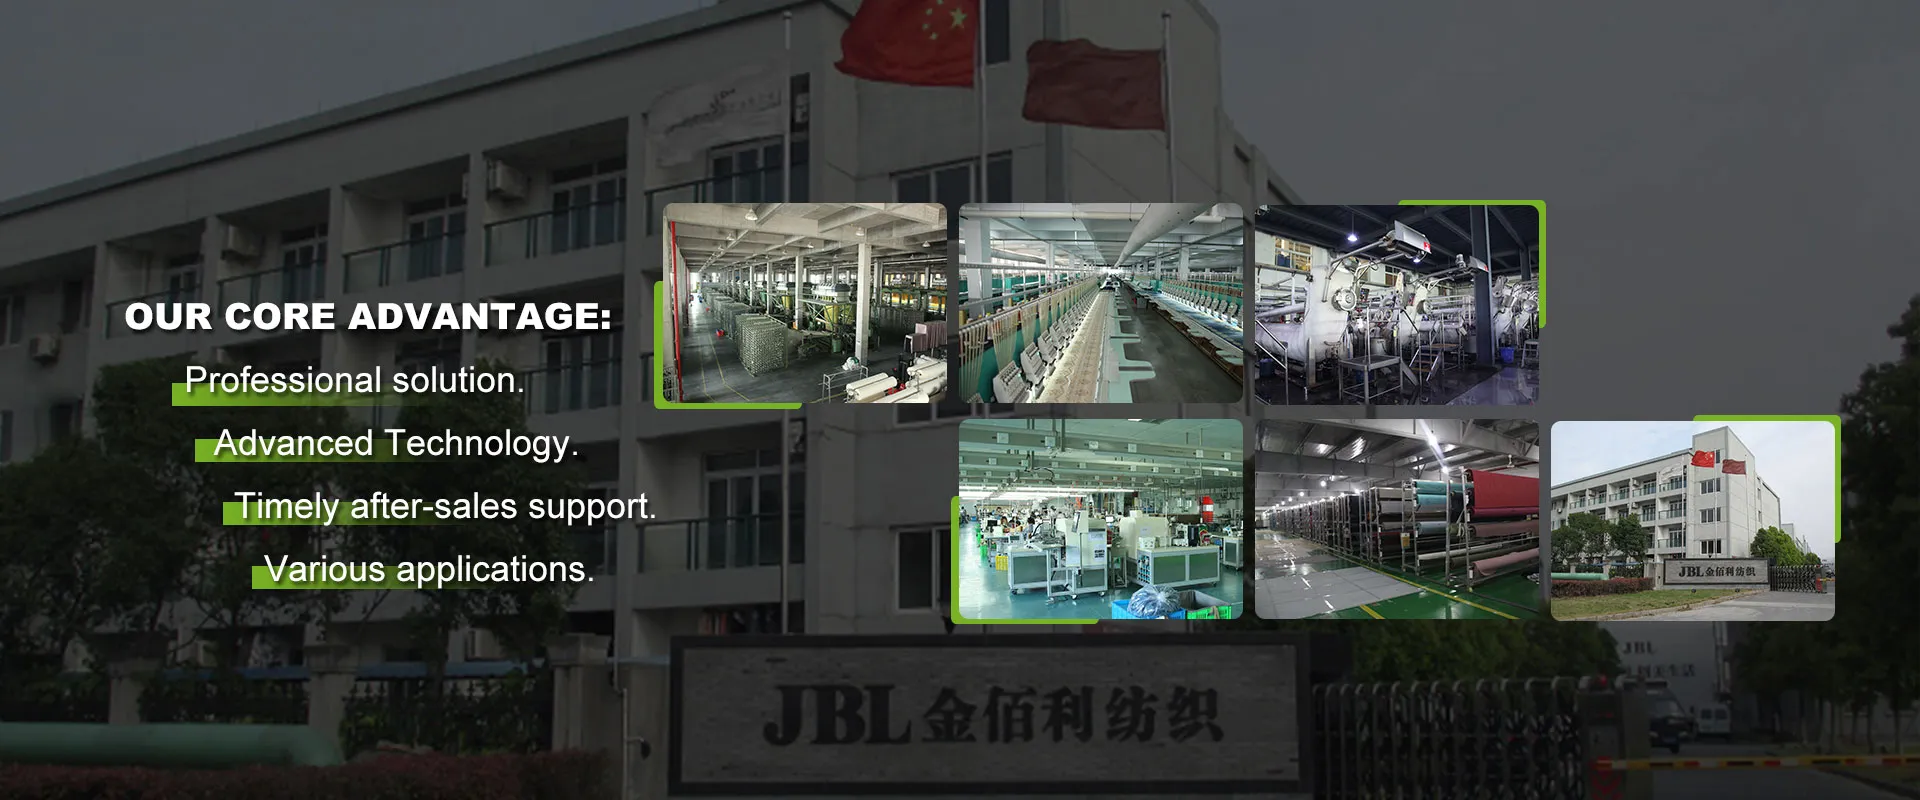 Henting Jinbaili Textile Co., Ltd.